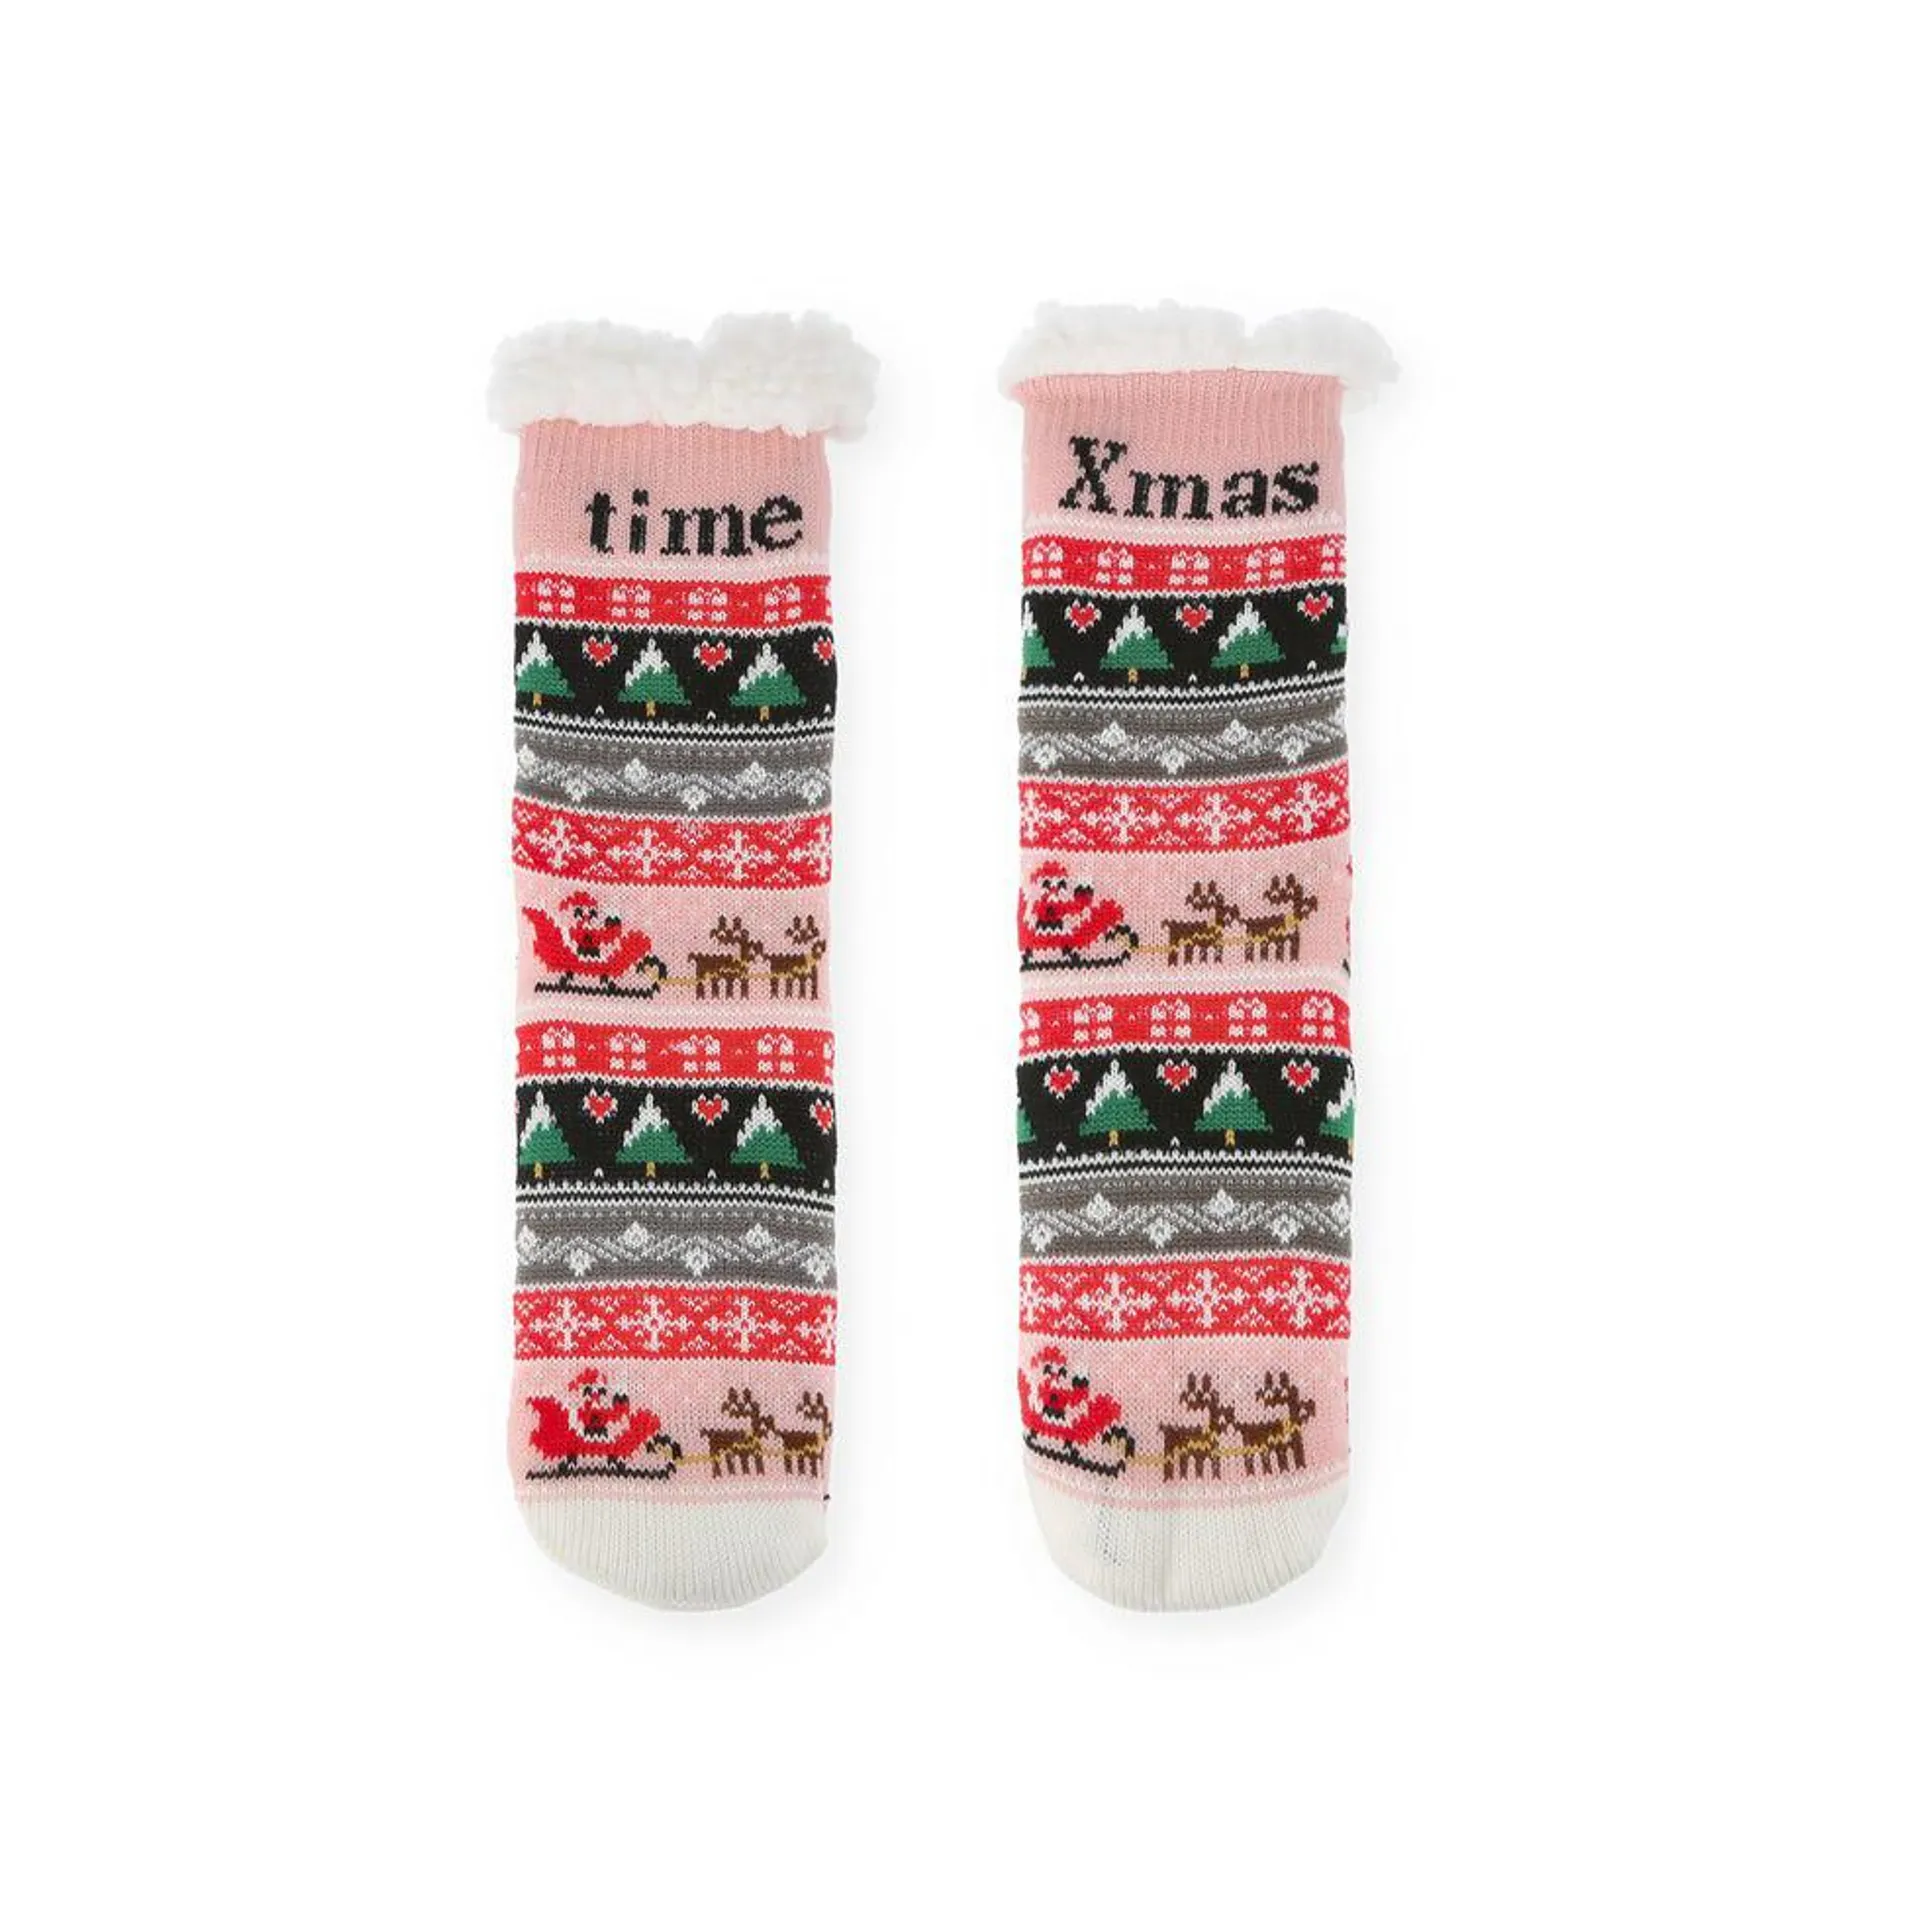 Calcetines gruesos navideños – Arcade talla - S/M